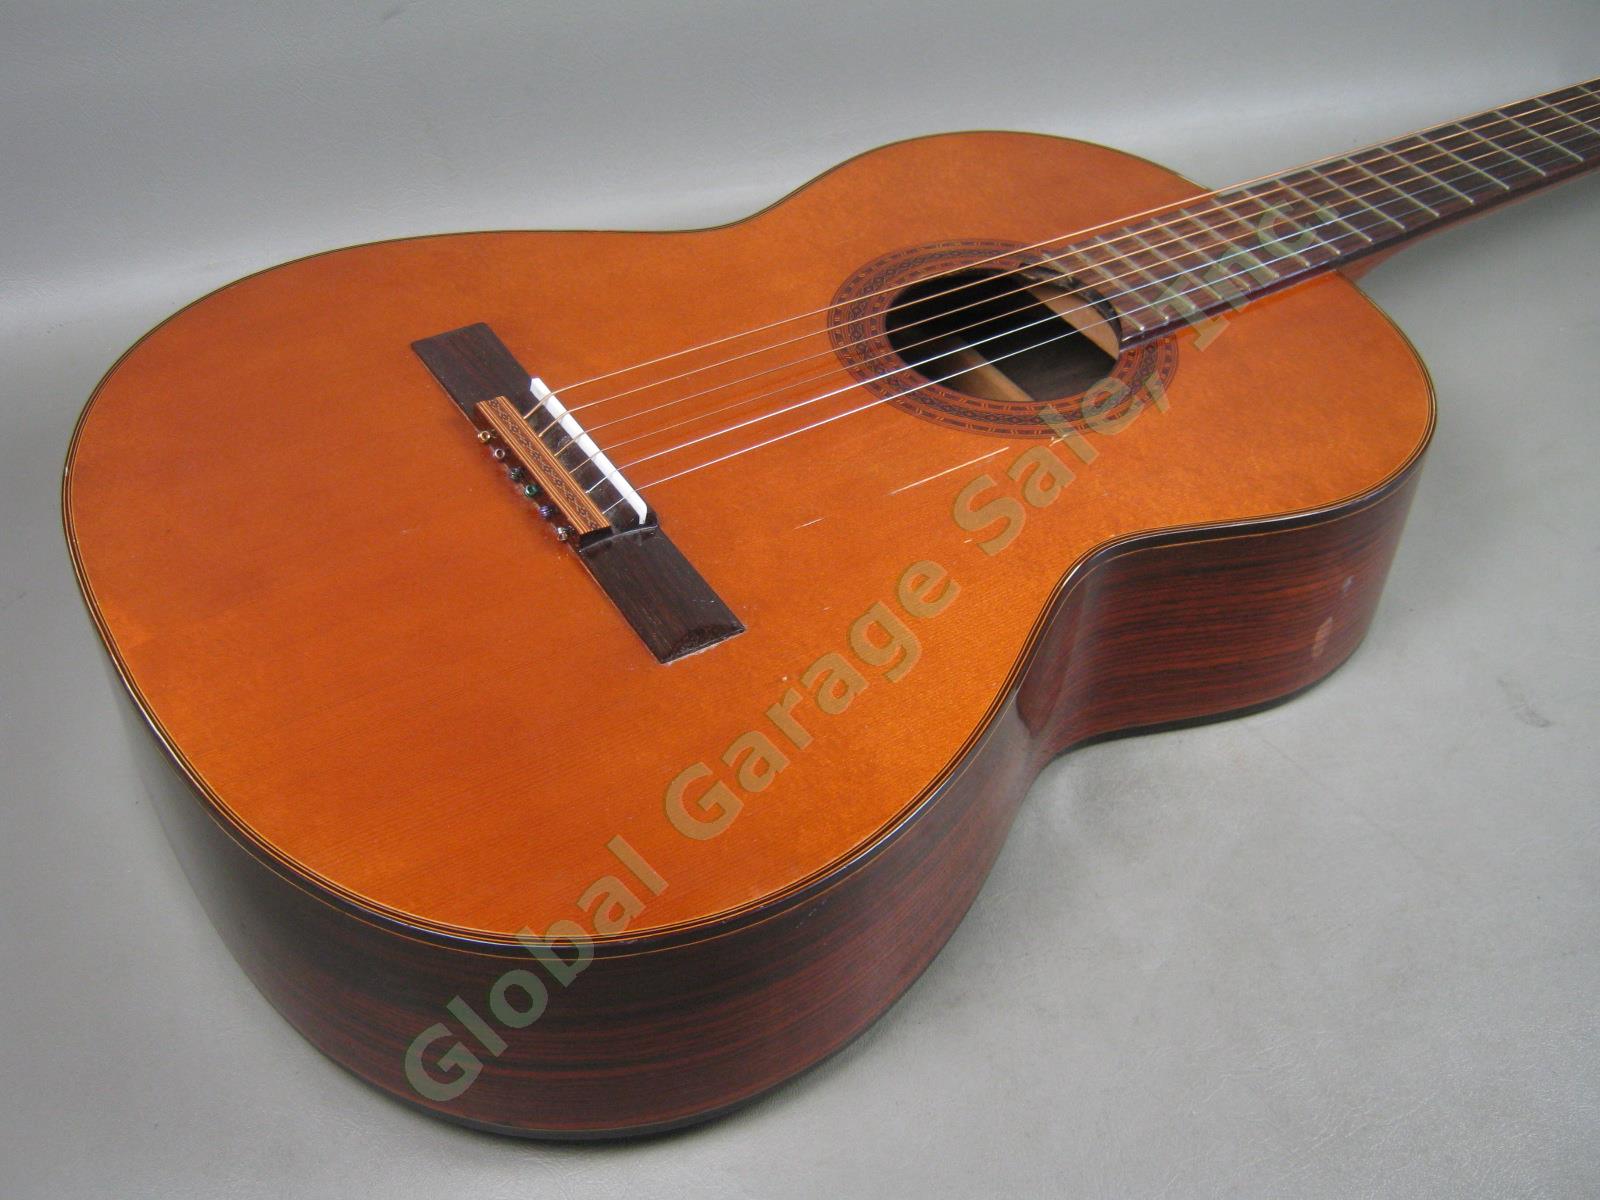 Rare Vtg 1970s Alvarez 5001 Classical Acoustic Guitar Made In Japan W/ Hard Case 4